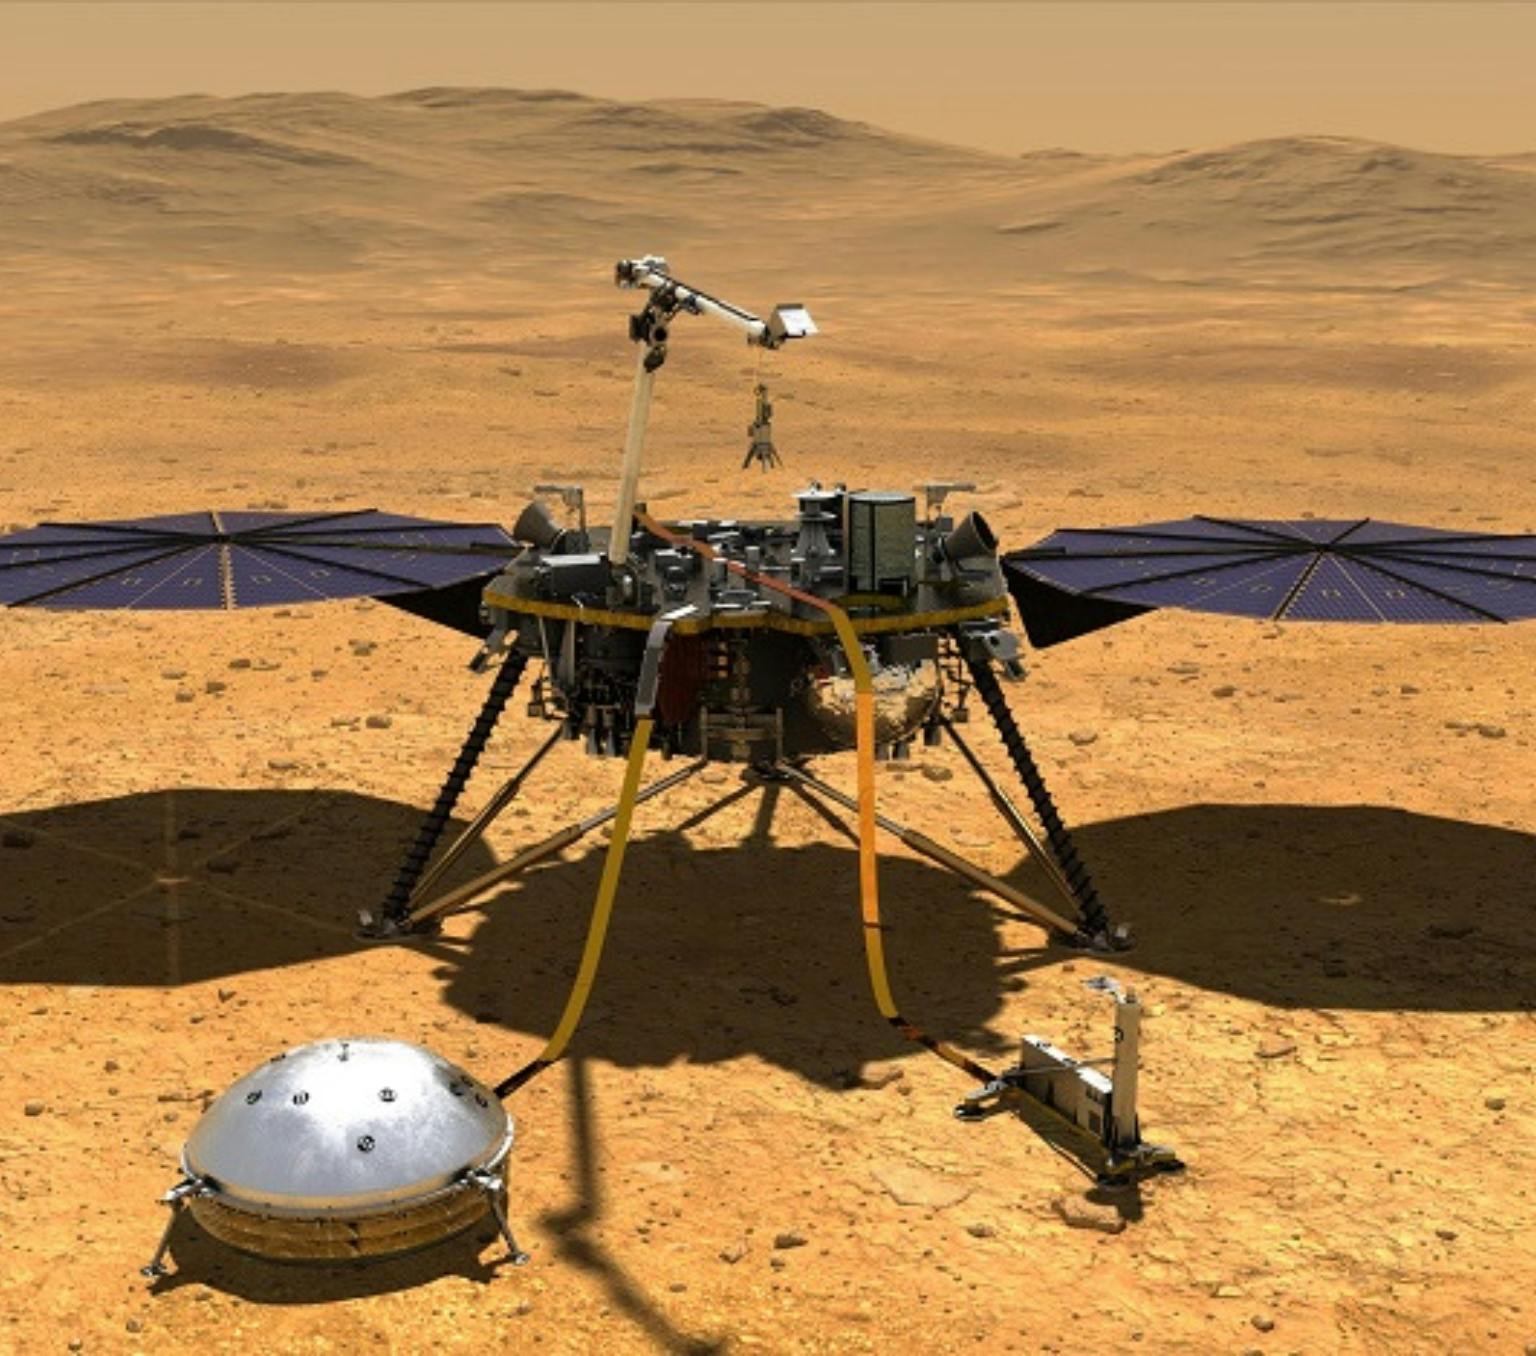 An illustration of NASA's InSight spacecraft on Mars. Photo: NASA/JPL-Caltech